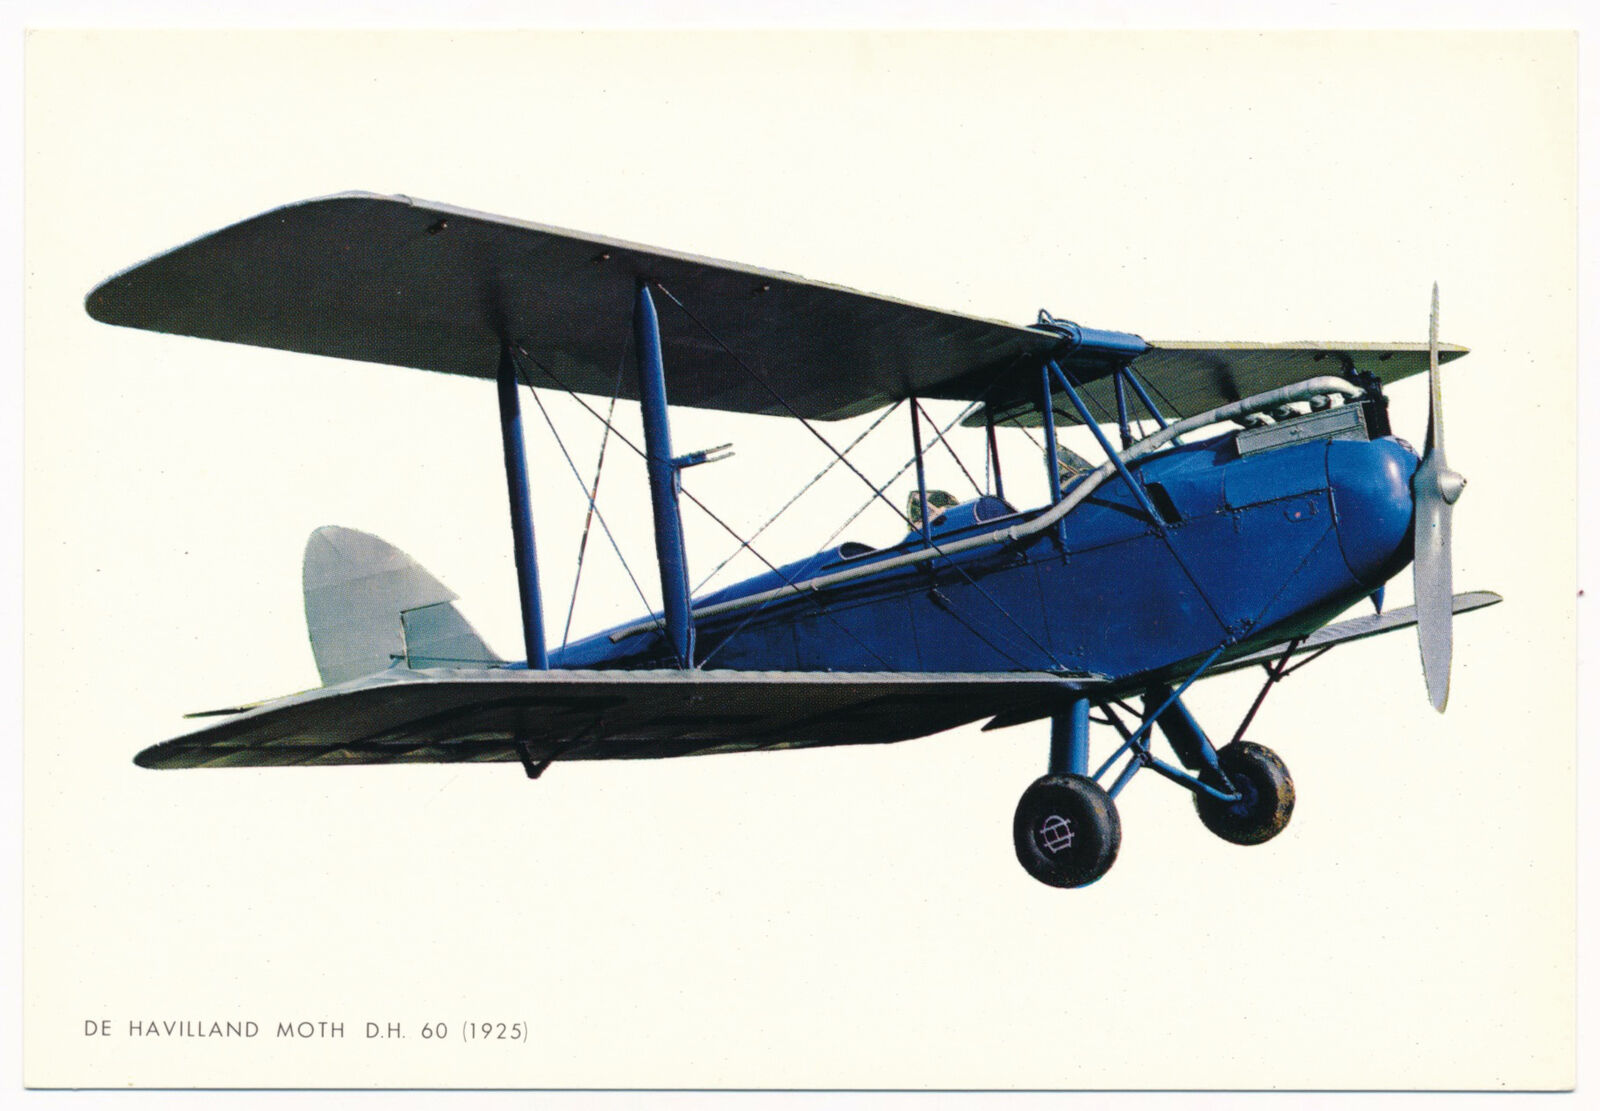 De Havilland MOTH D.H. 60 Touring and Training Aircraft